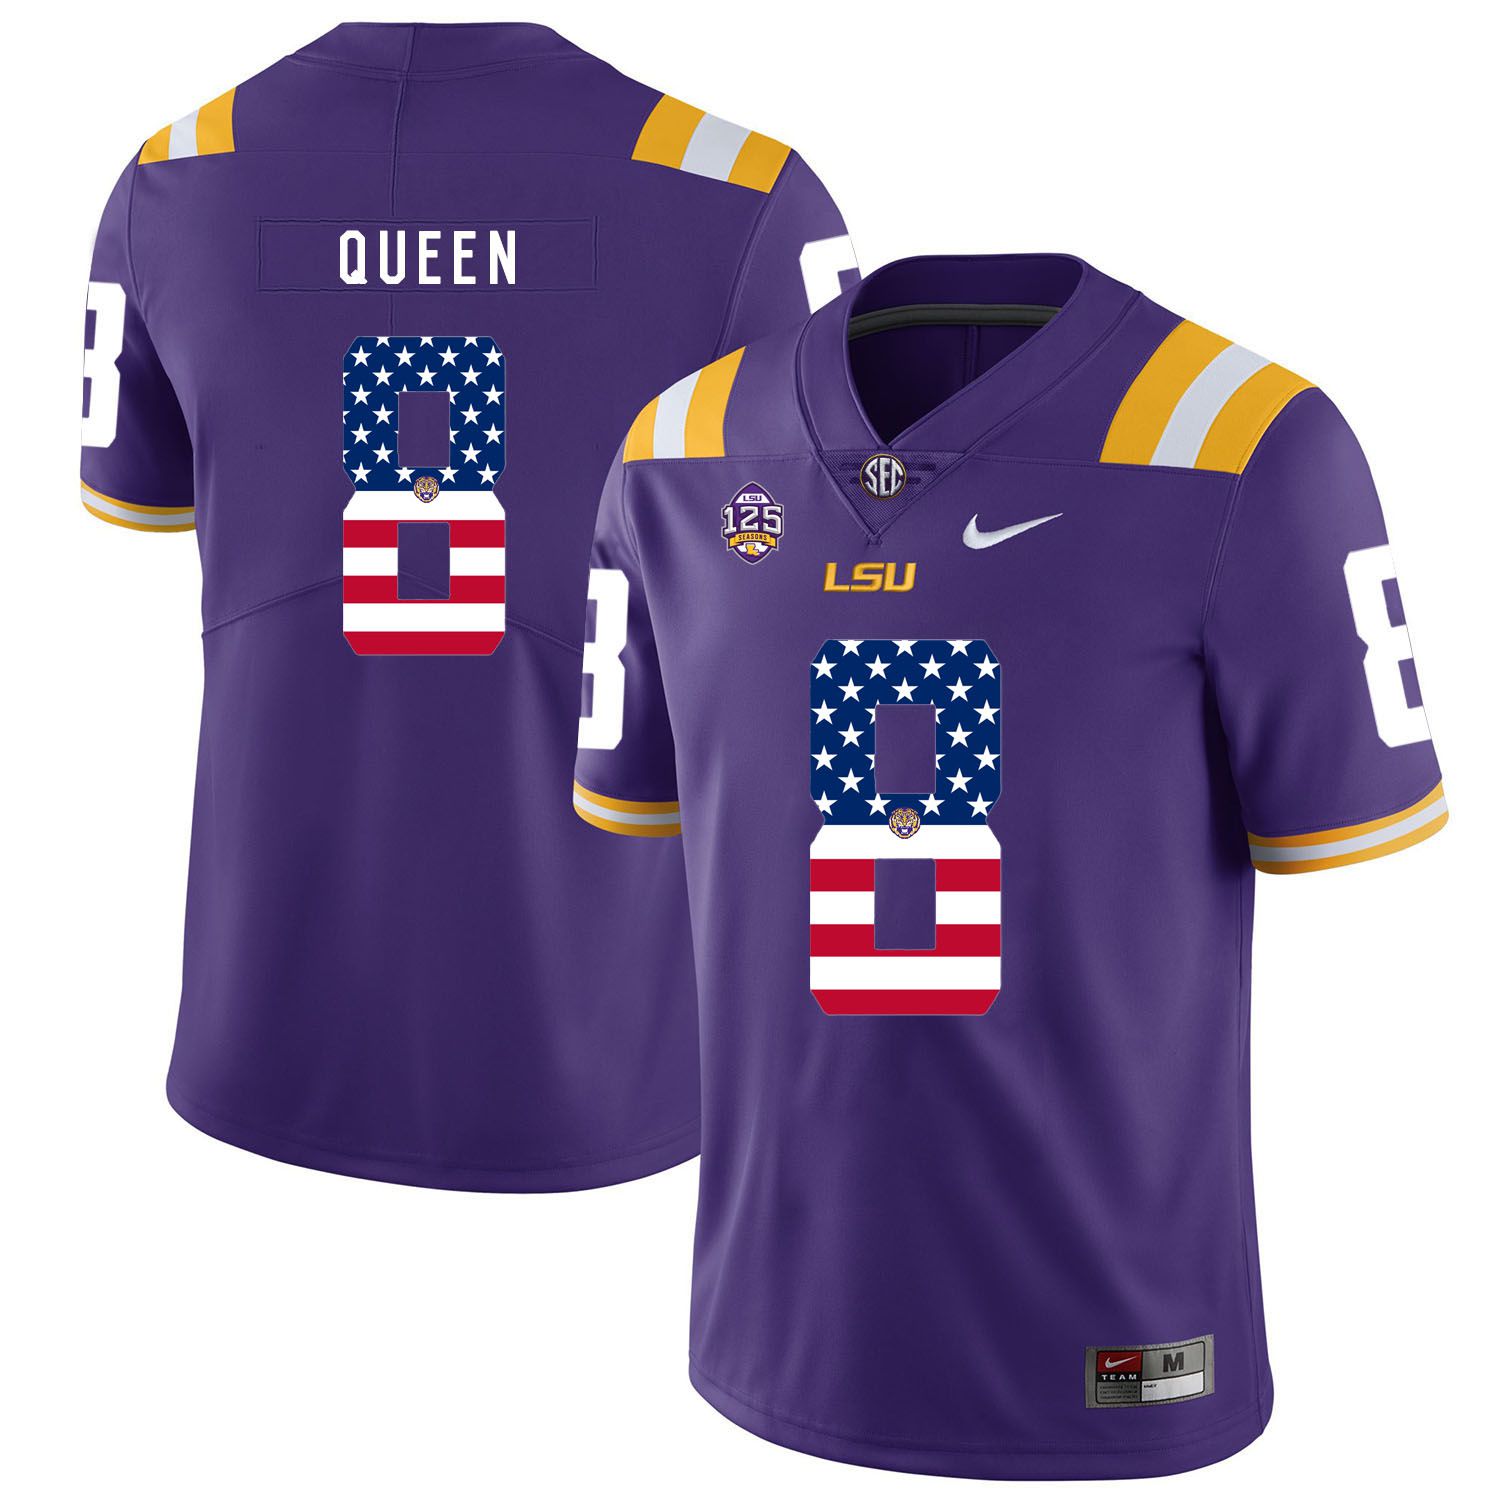 Men LSU Tigers 8 Queen Purple Flag Customized NCAA Jerseys